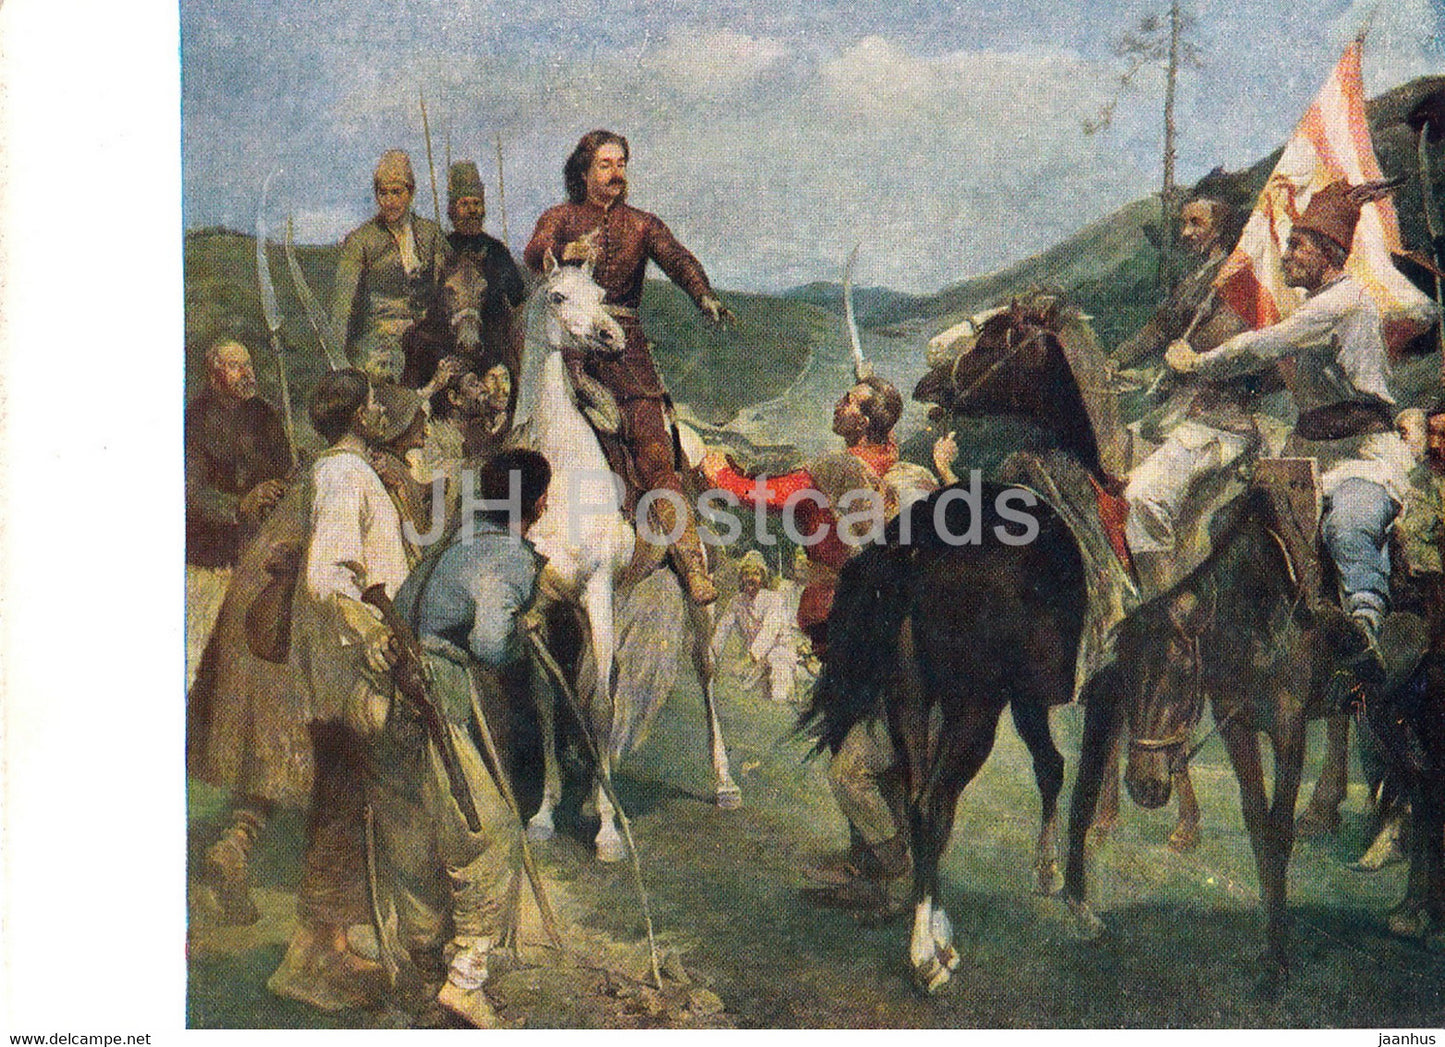 painting by E. Veszpremi - Rakoczi and Esze Tamas meeting - horse - 1 - Hungarian art - 1959 - Russia USSR - unused - JH Postcards